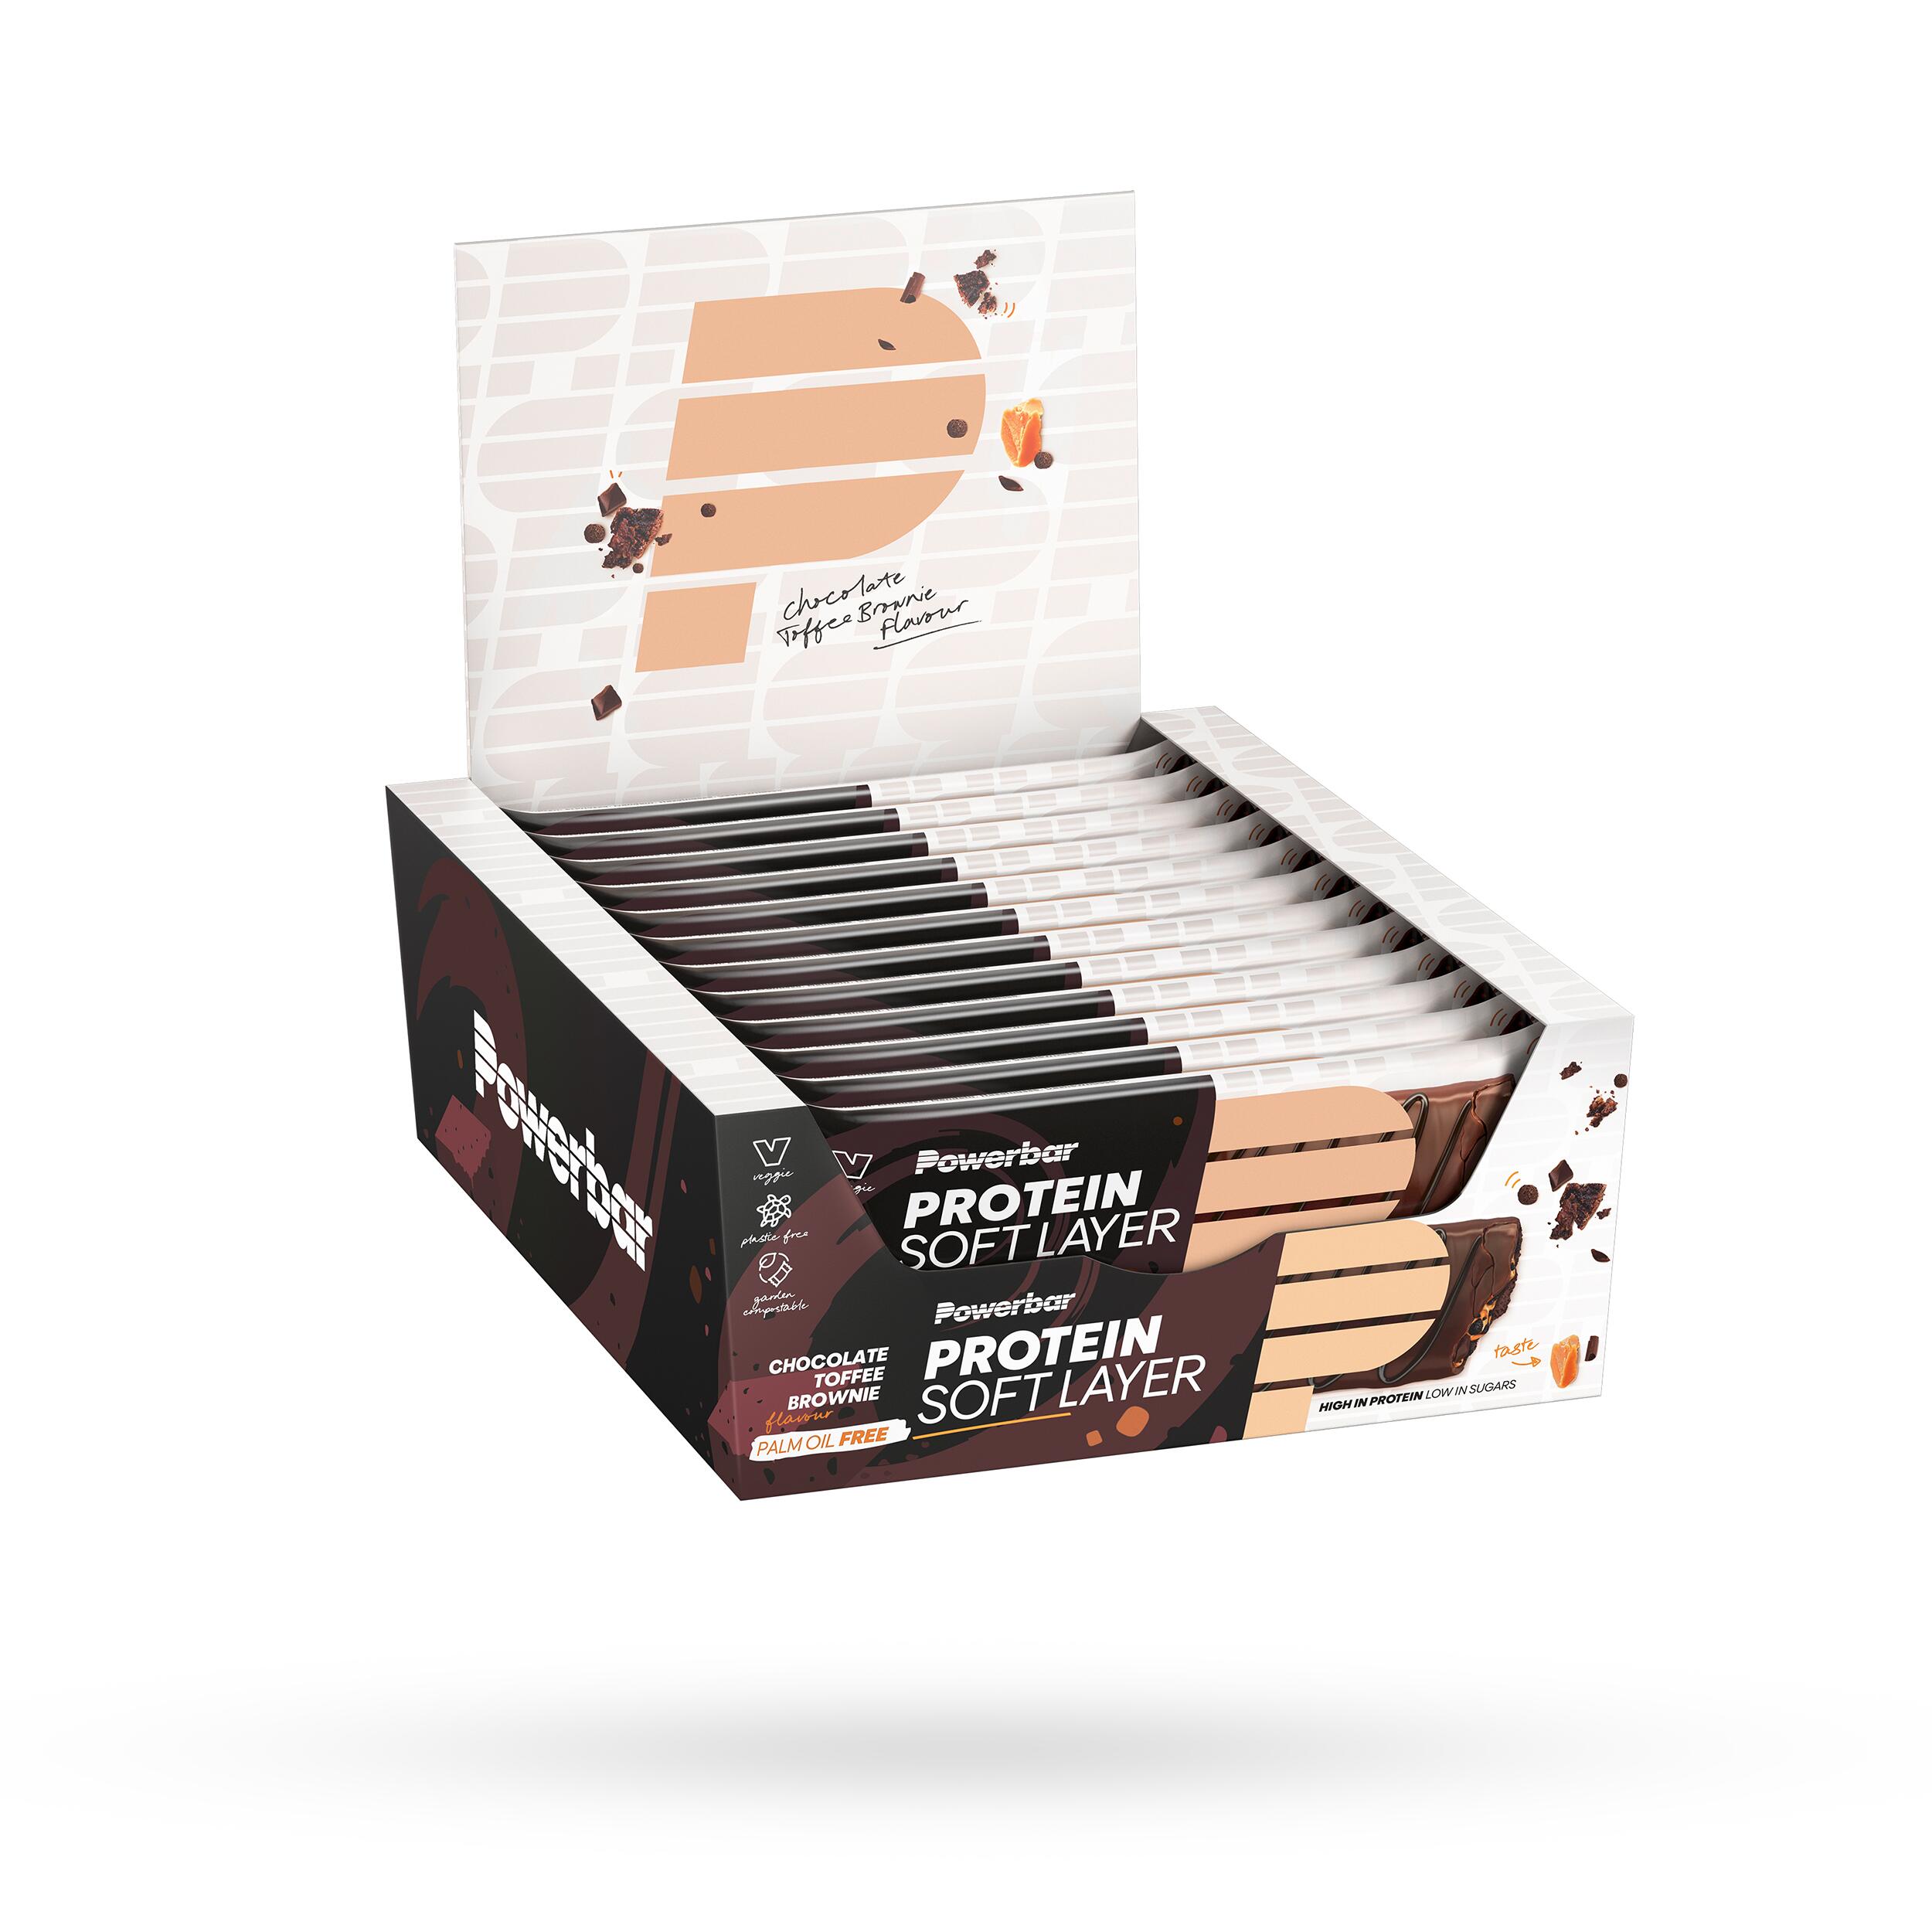 Baton proteic Ciocolată Toffee Brownie *12